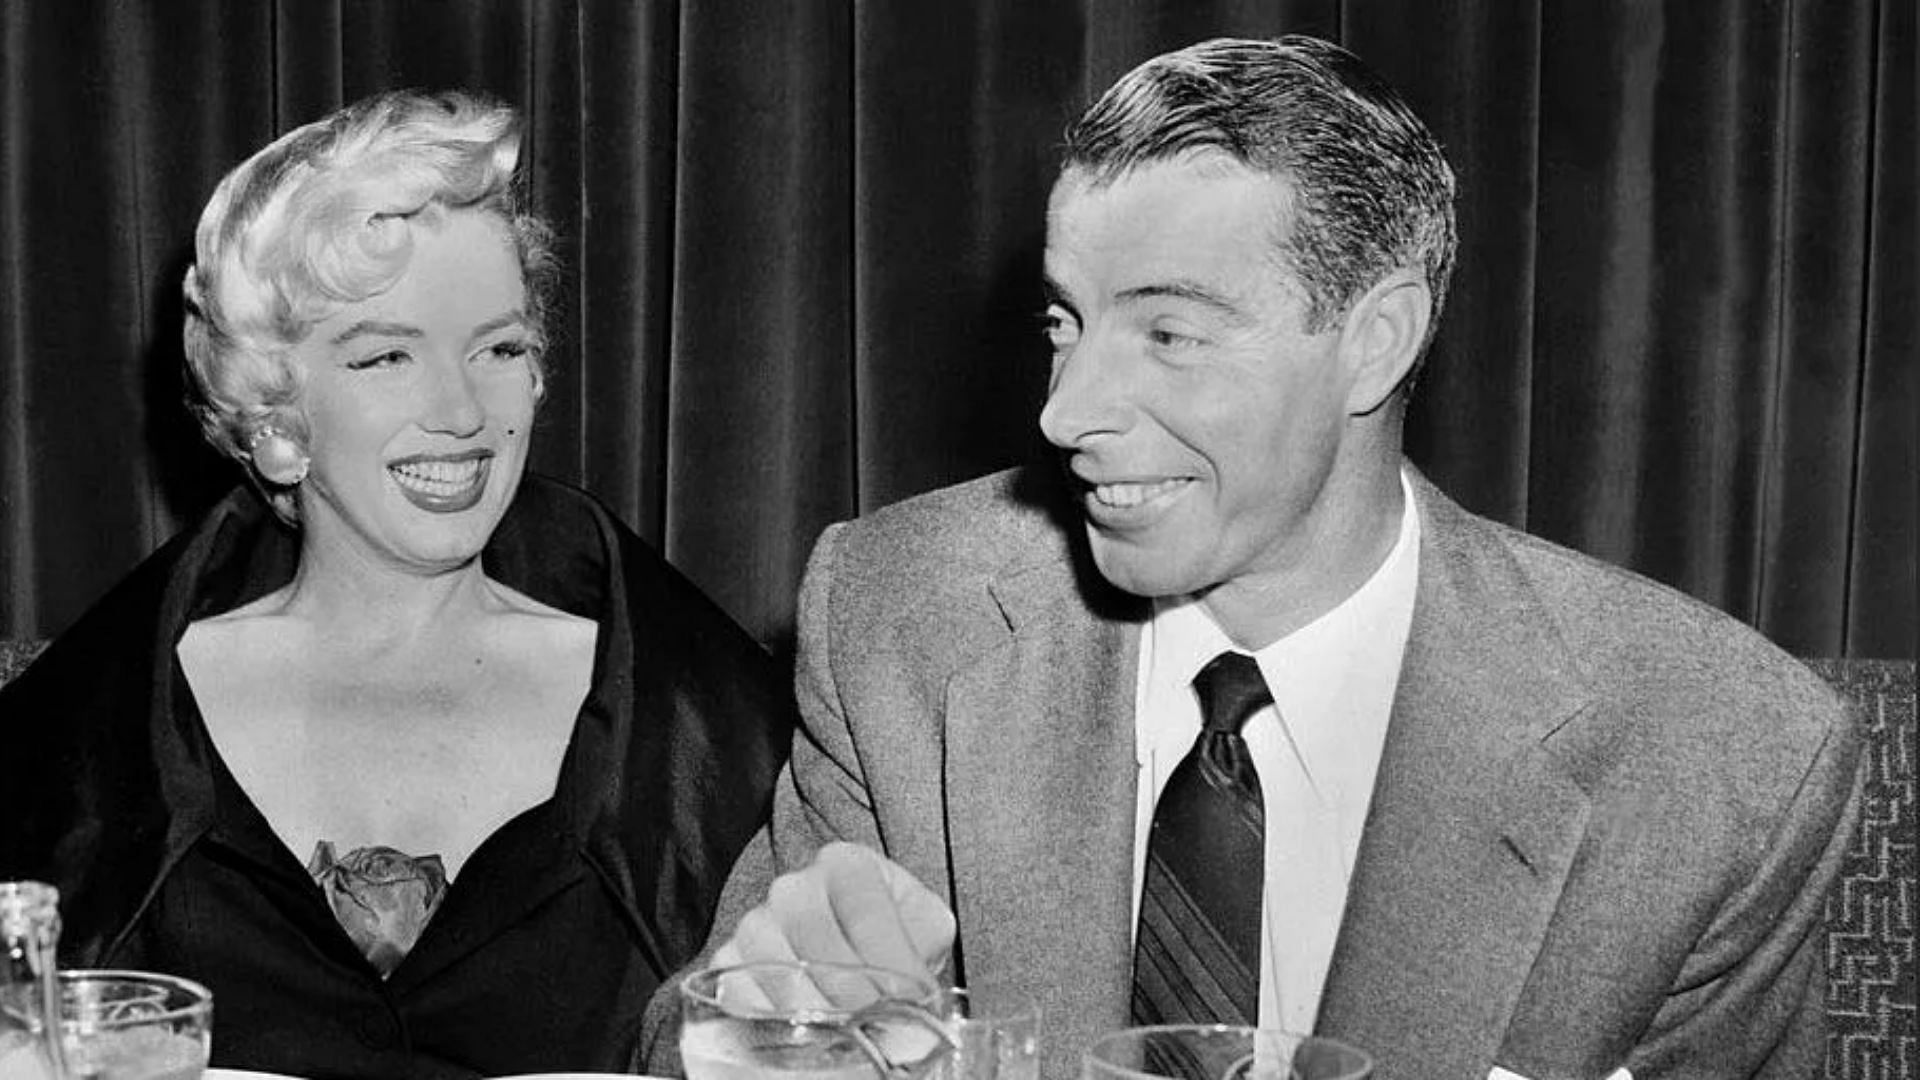 MLB star Joe DiMaggio with Marilyn Monroe